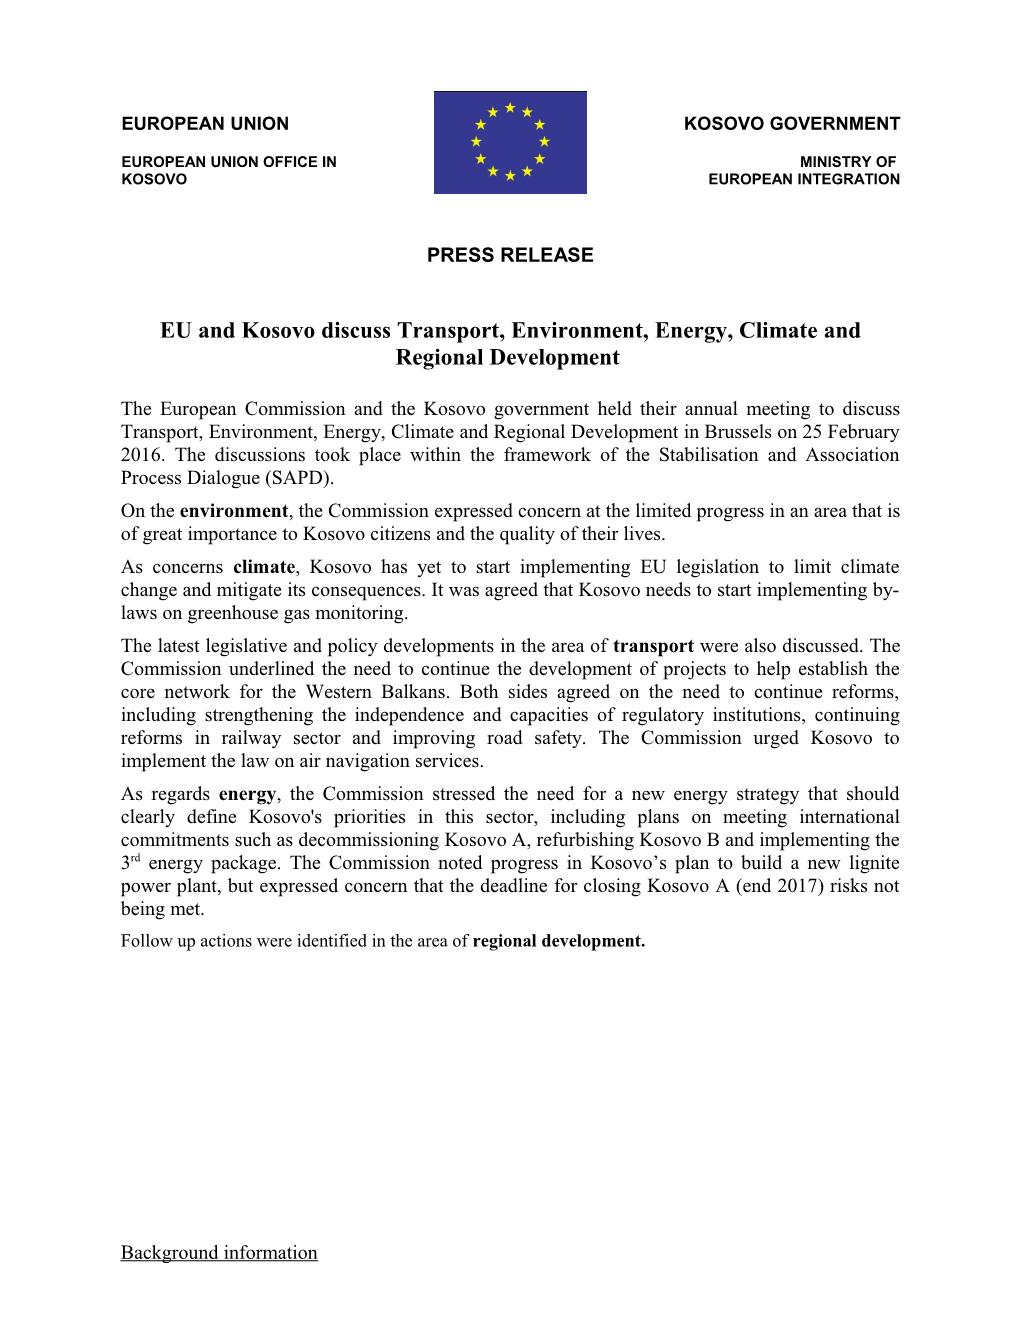 EU and Kosovo Discuss Transport, Environment, Energy, Climate and Regional Development